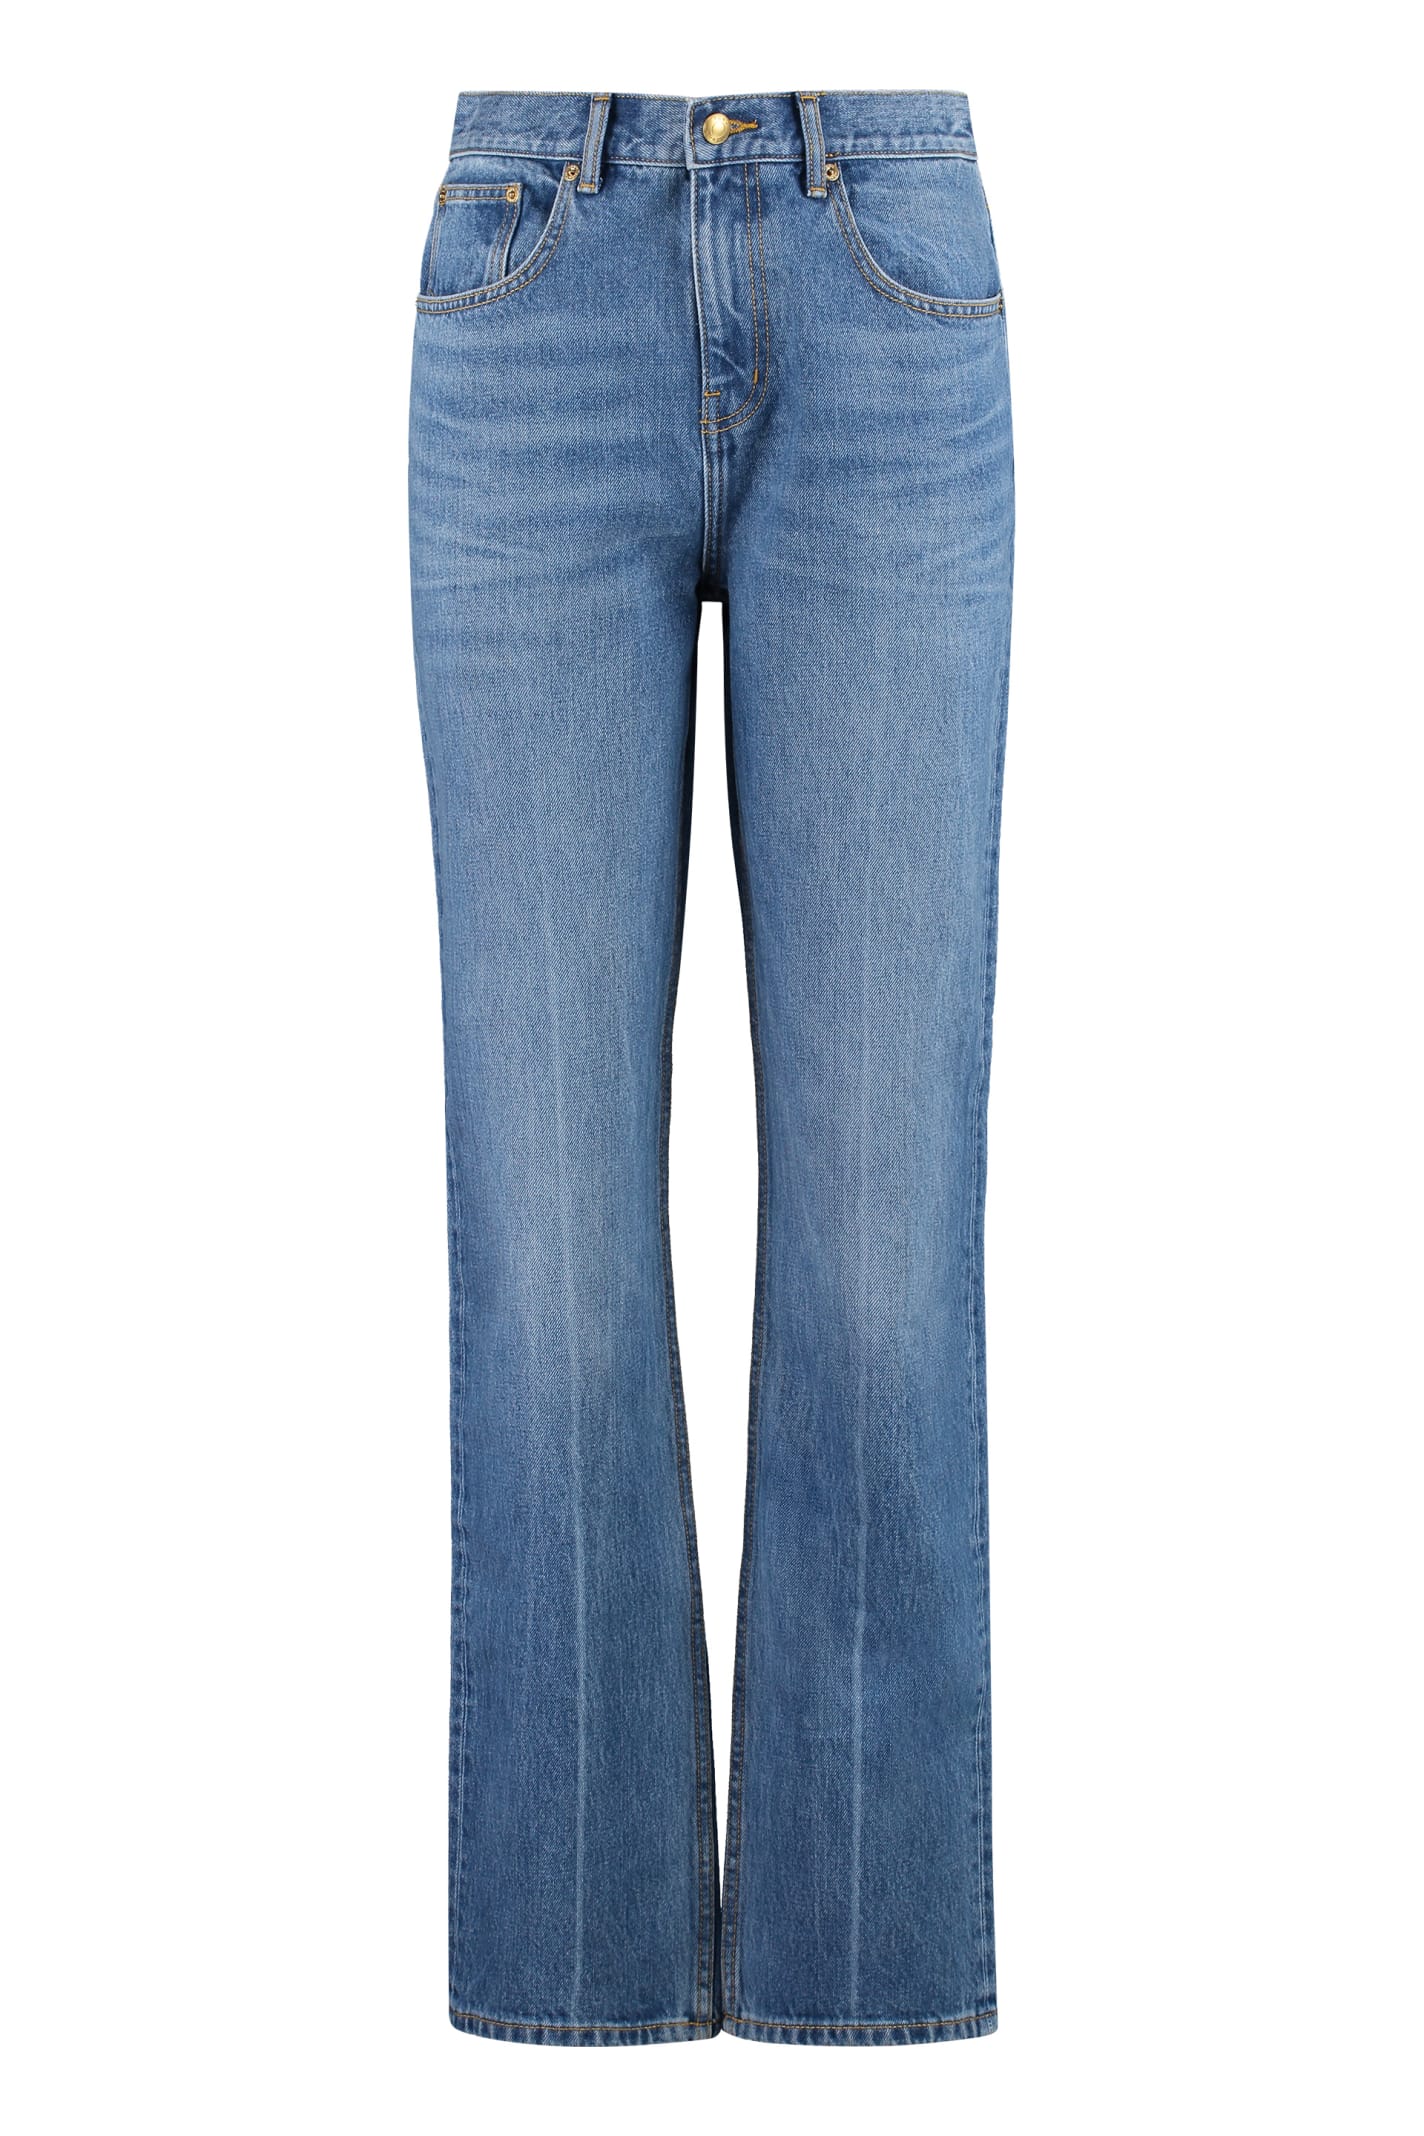 Shop Tory Burch 5-pocket Straight-leg Jeans